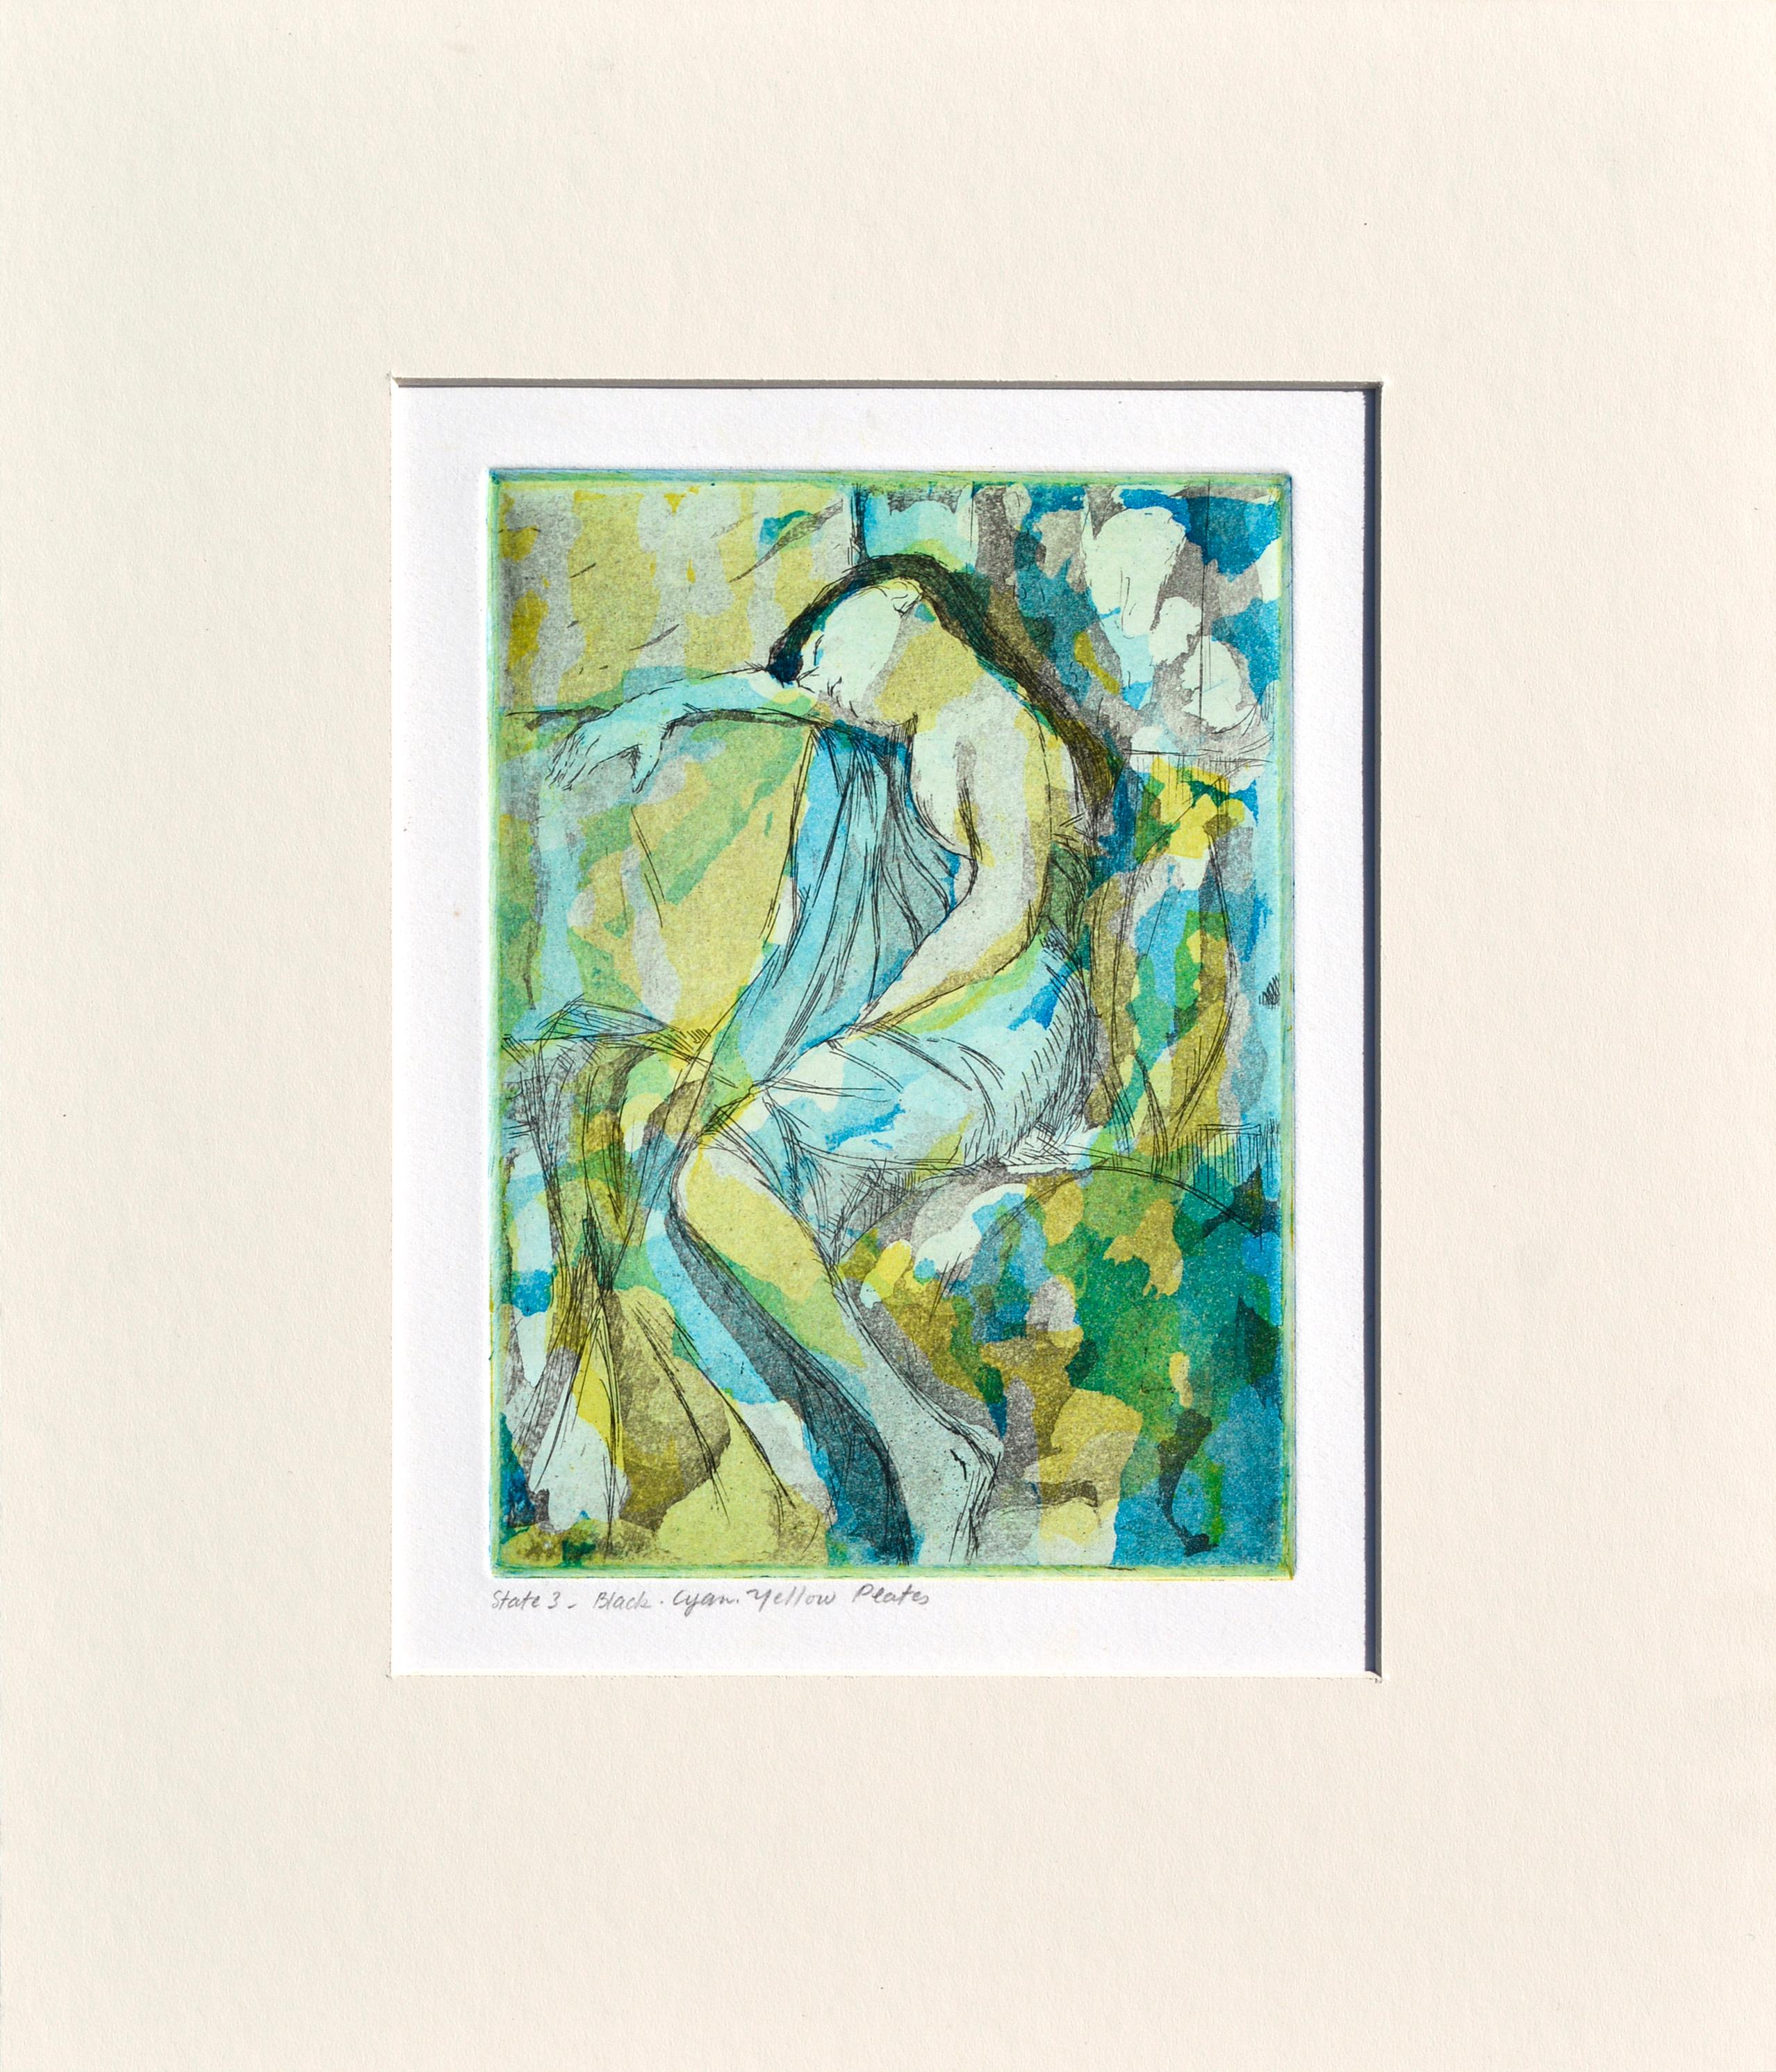 Femme allongée - Série abstraite figurative (série de 4) - Print de Patricia A Pearce